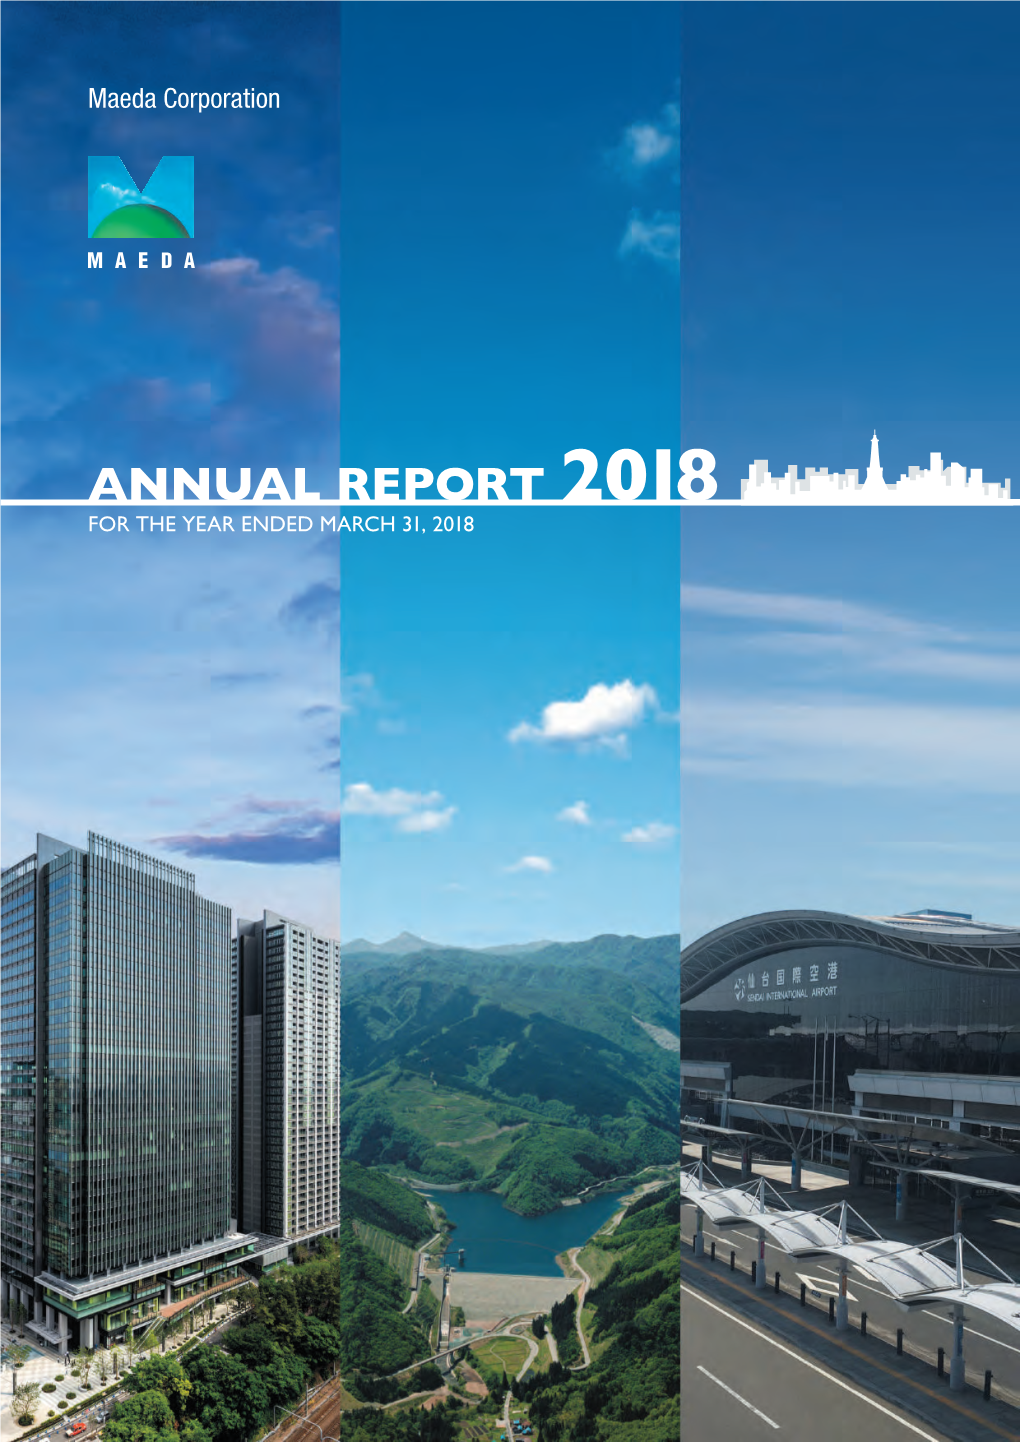 ANNUAL REPORT 2018 01 the History of Maeda Corporation